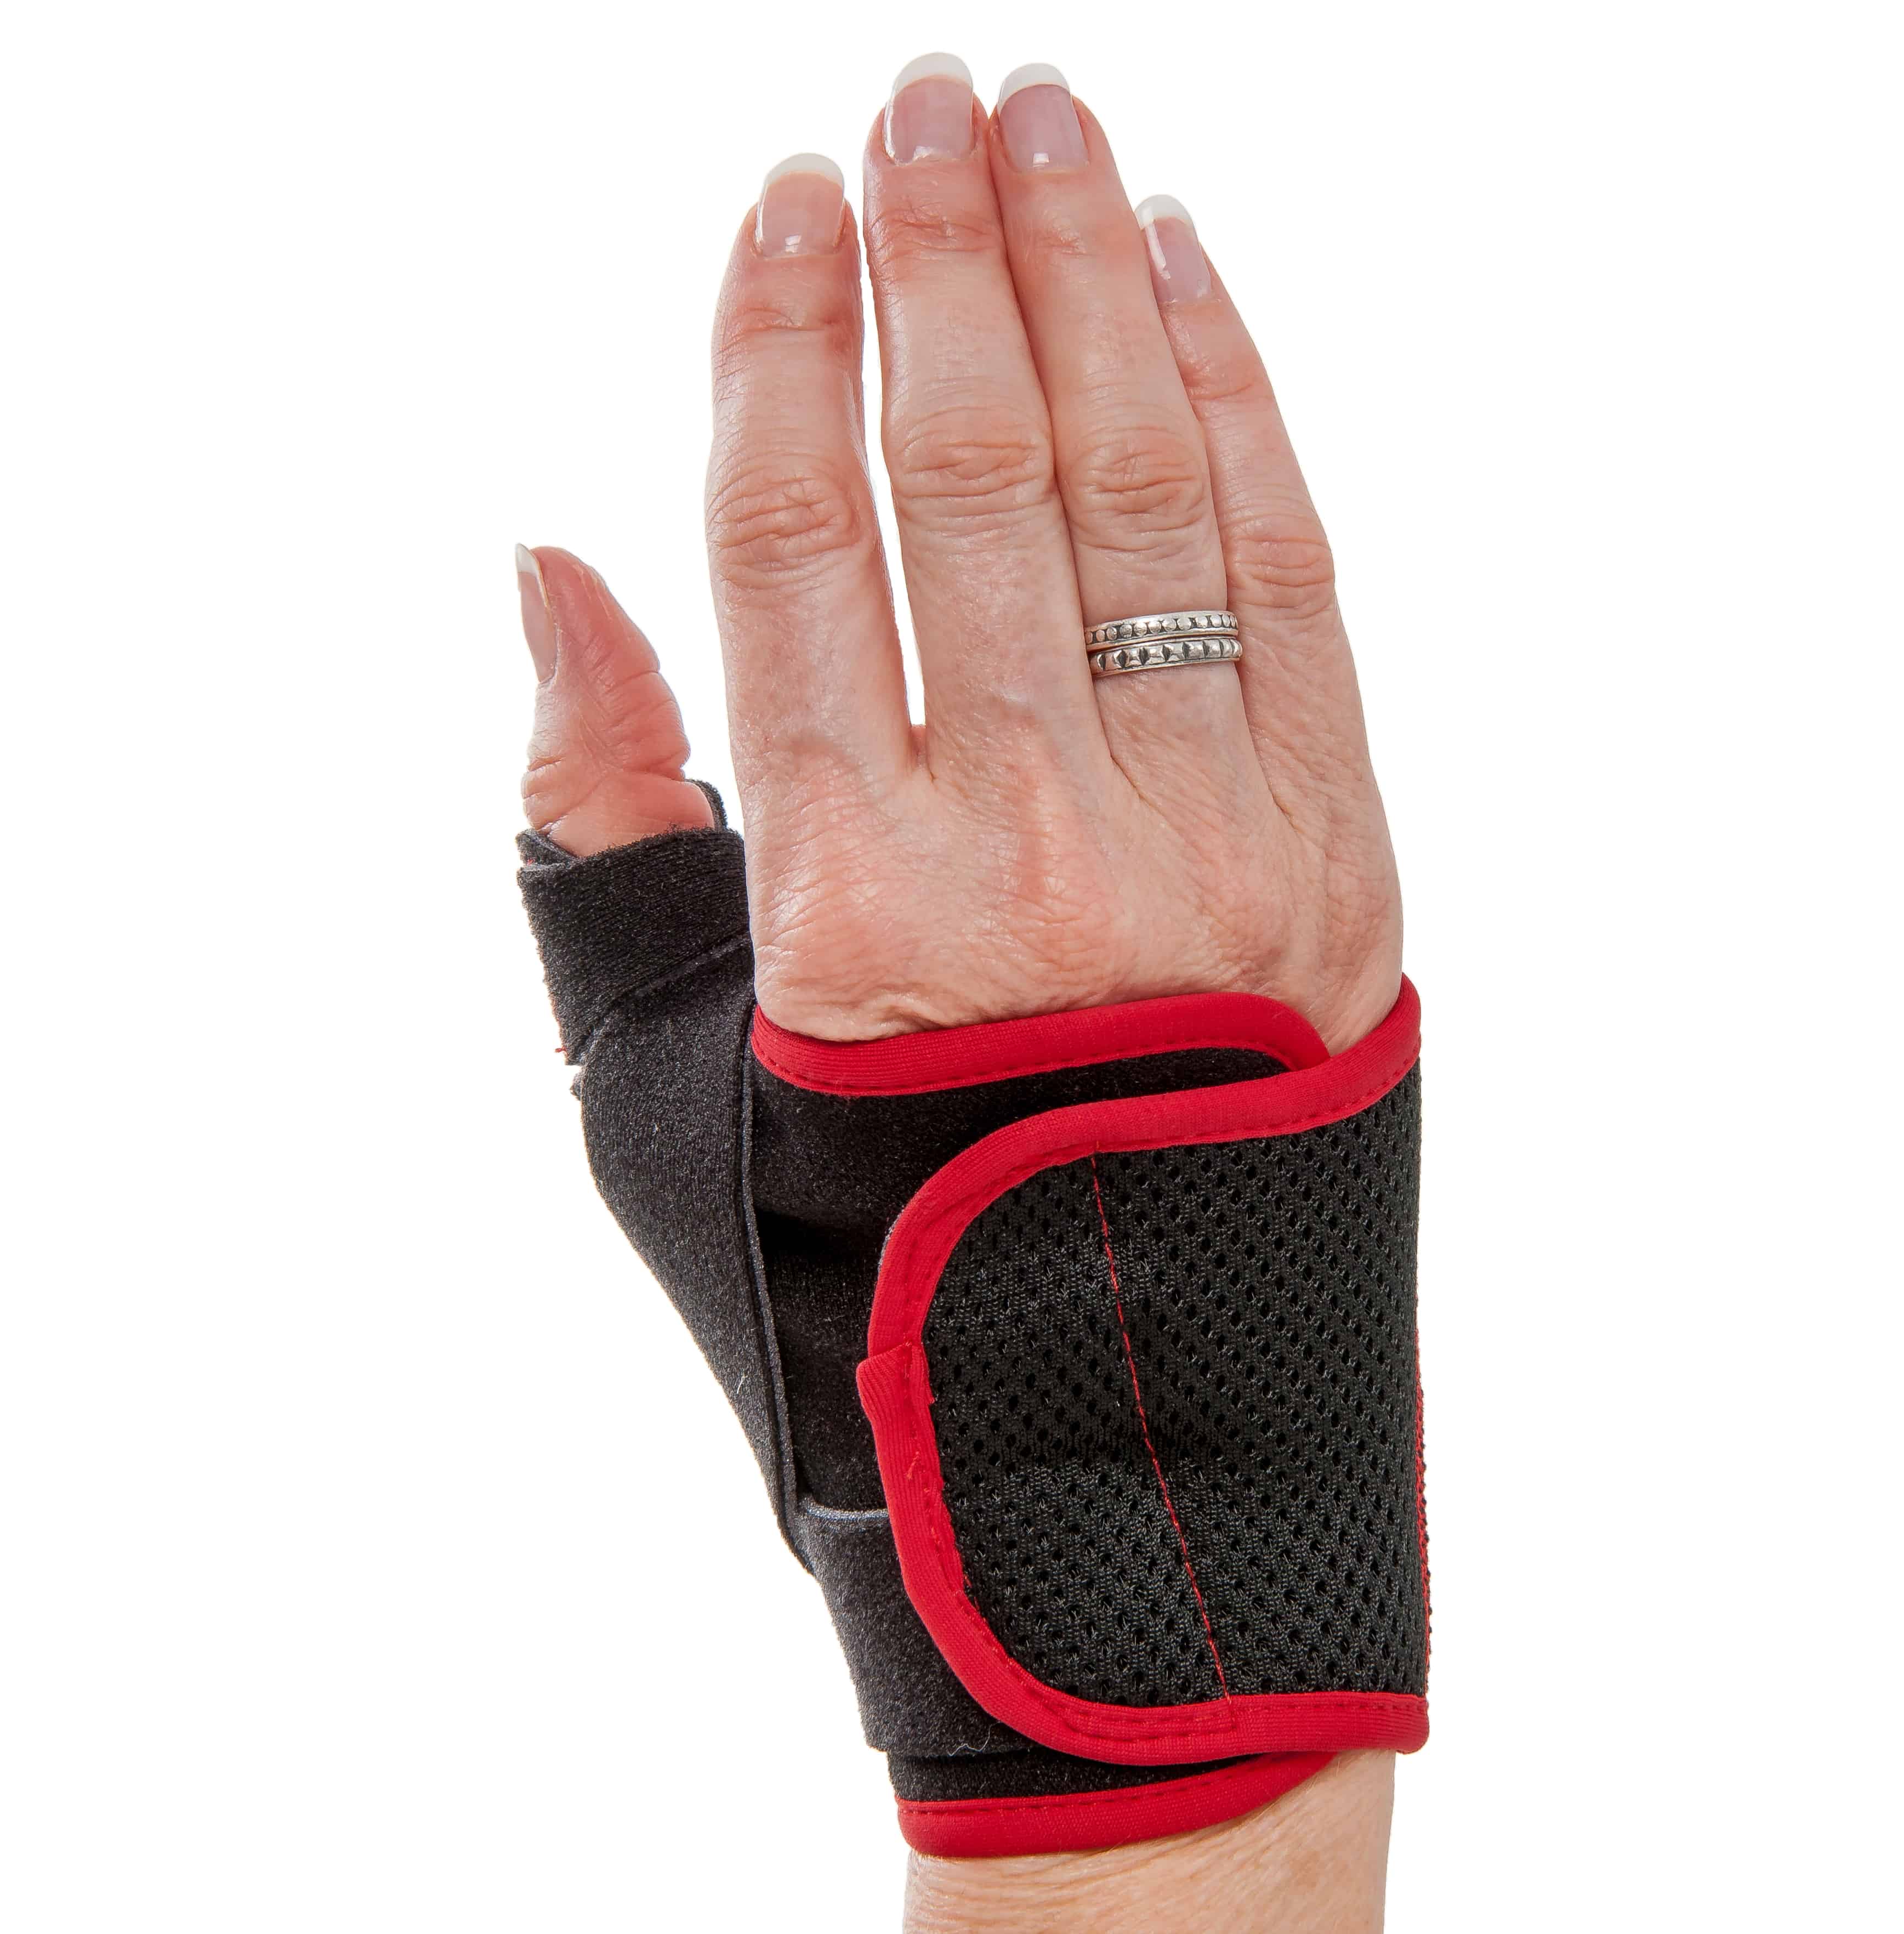 design line thumb splint for thumb arthritis